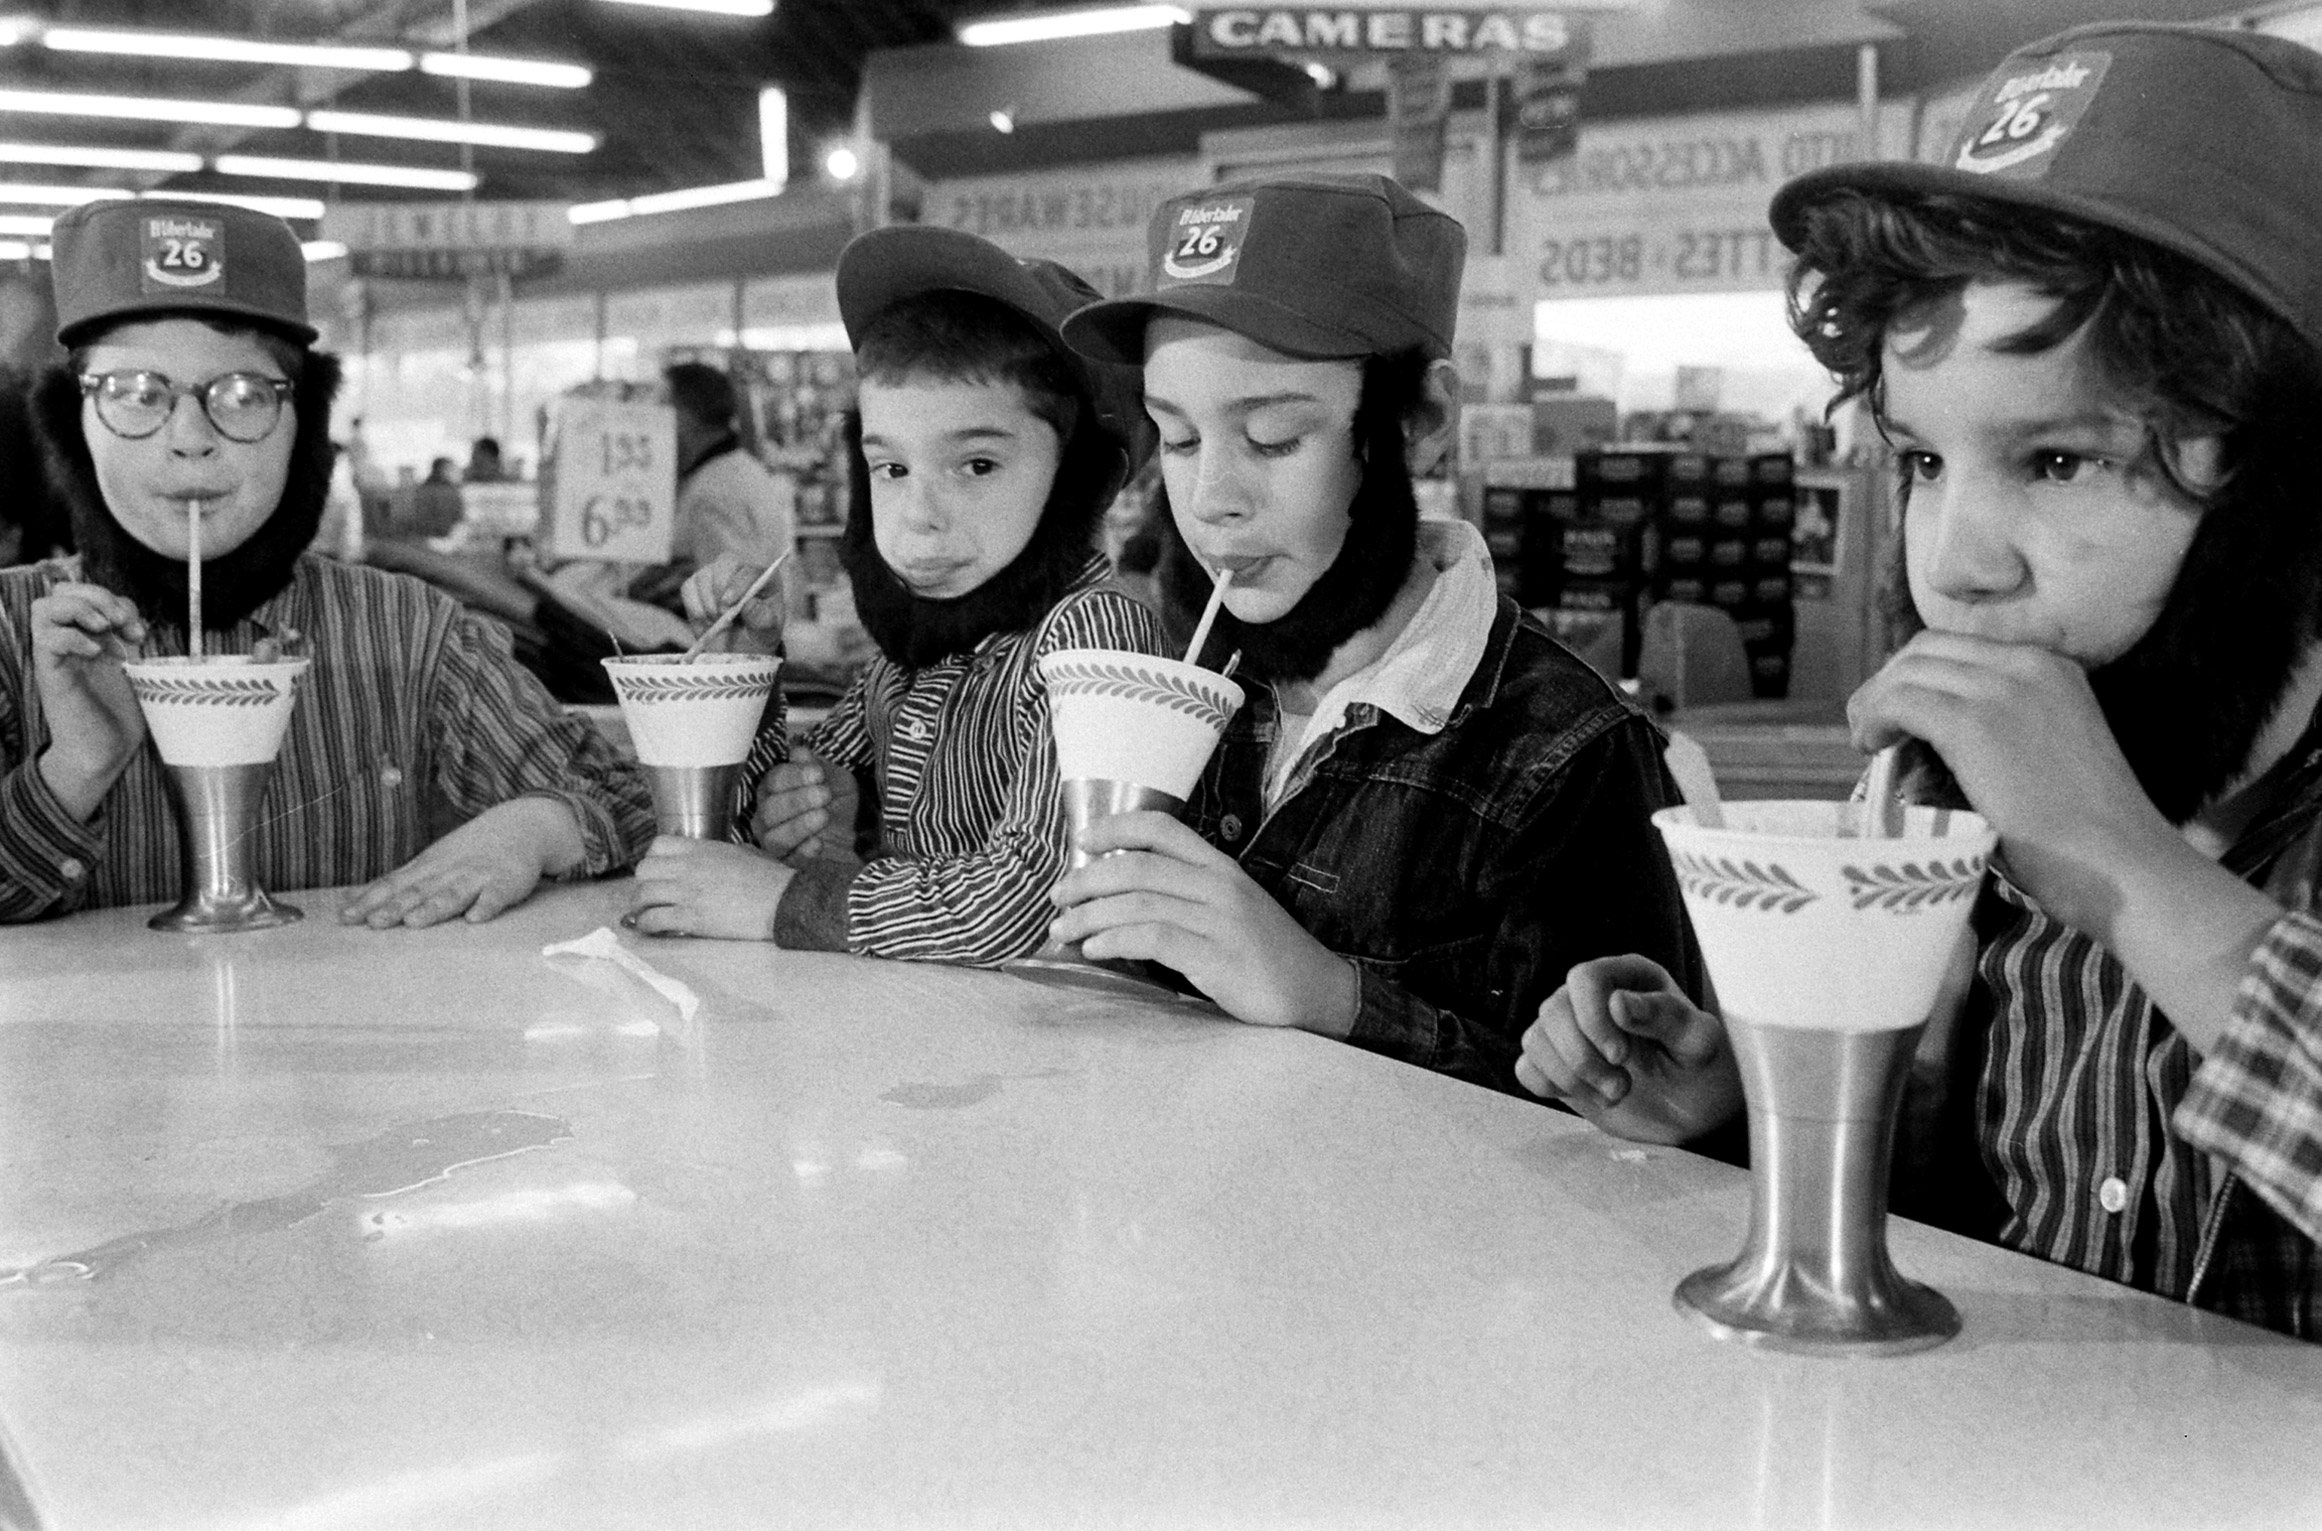 Children wearing Fidel Castro beards and hats, enjoying ice cream in 1959.